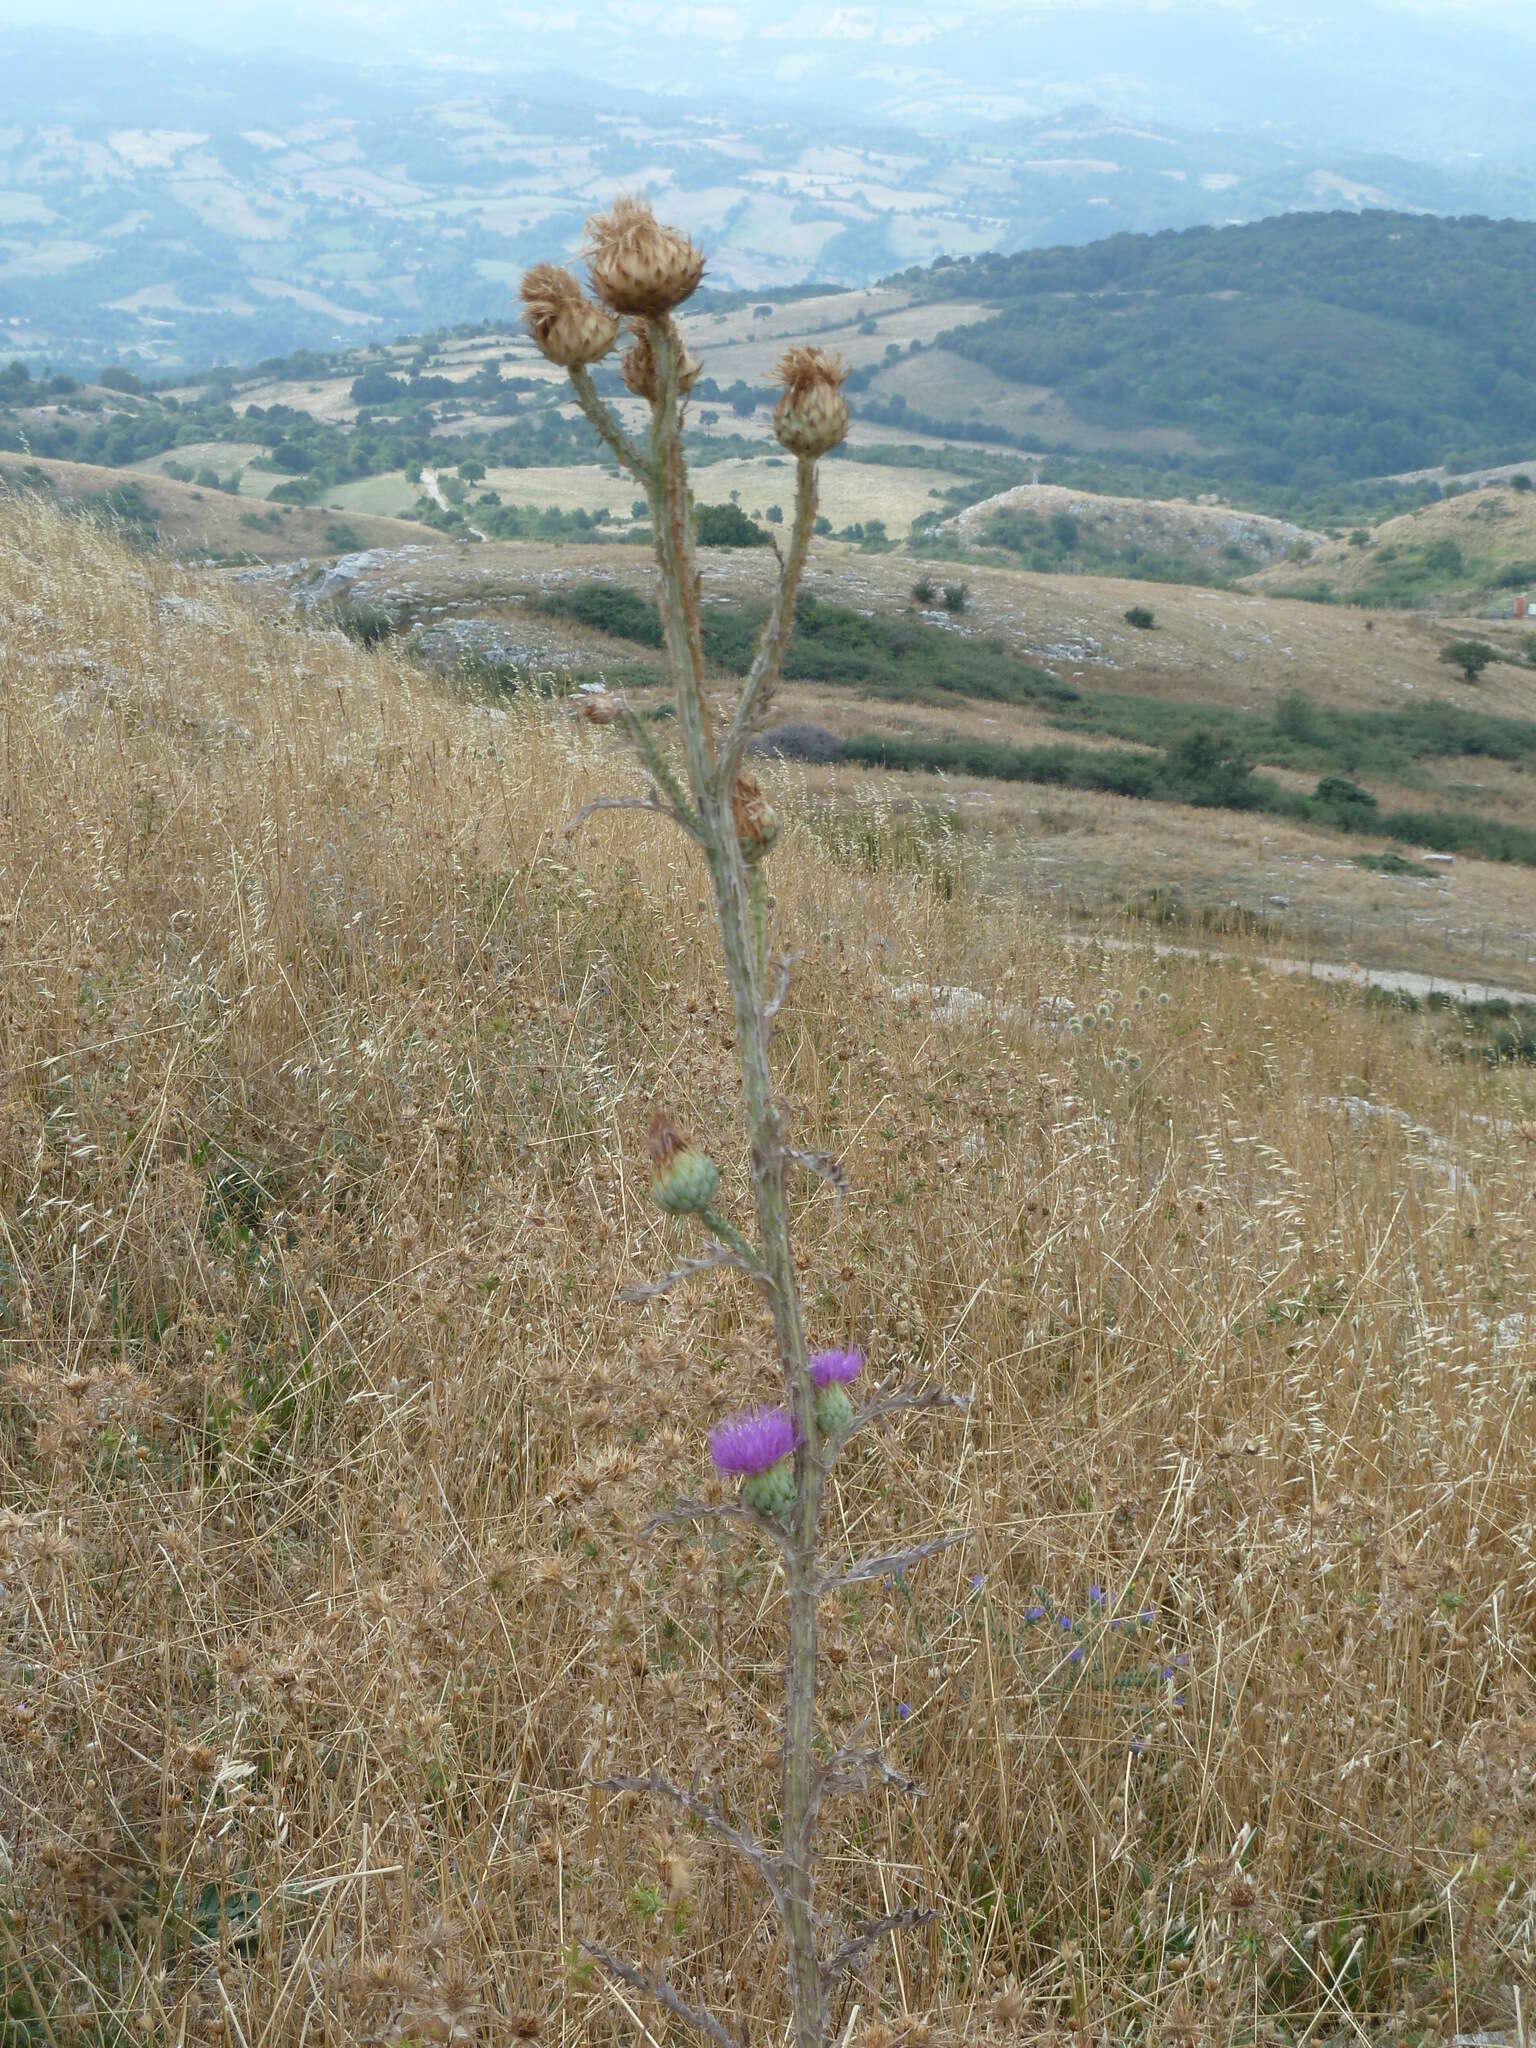 Image of Onopordum illyricum subsp. illyricum